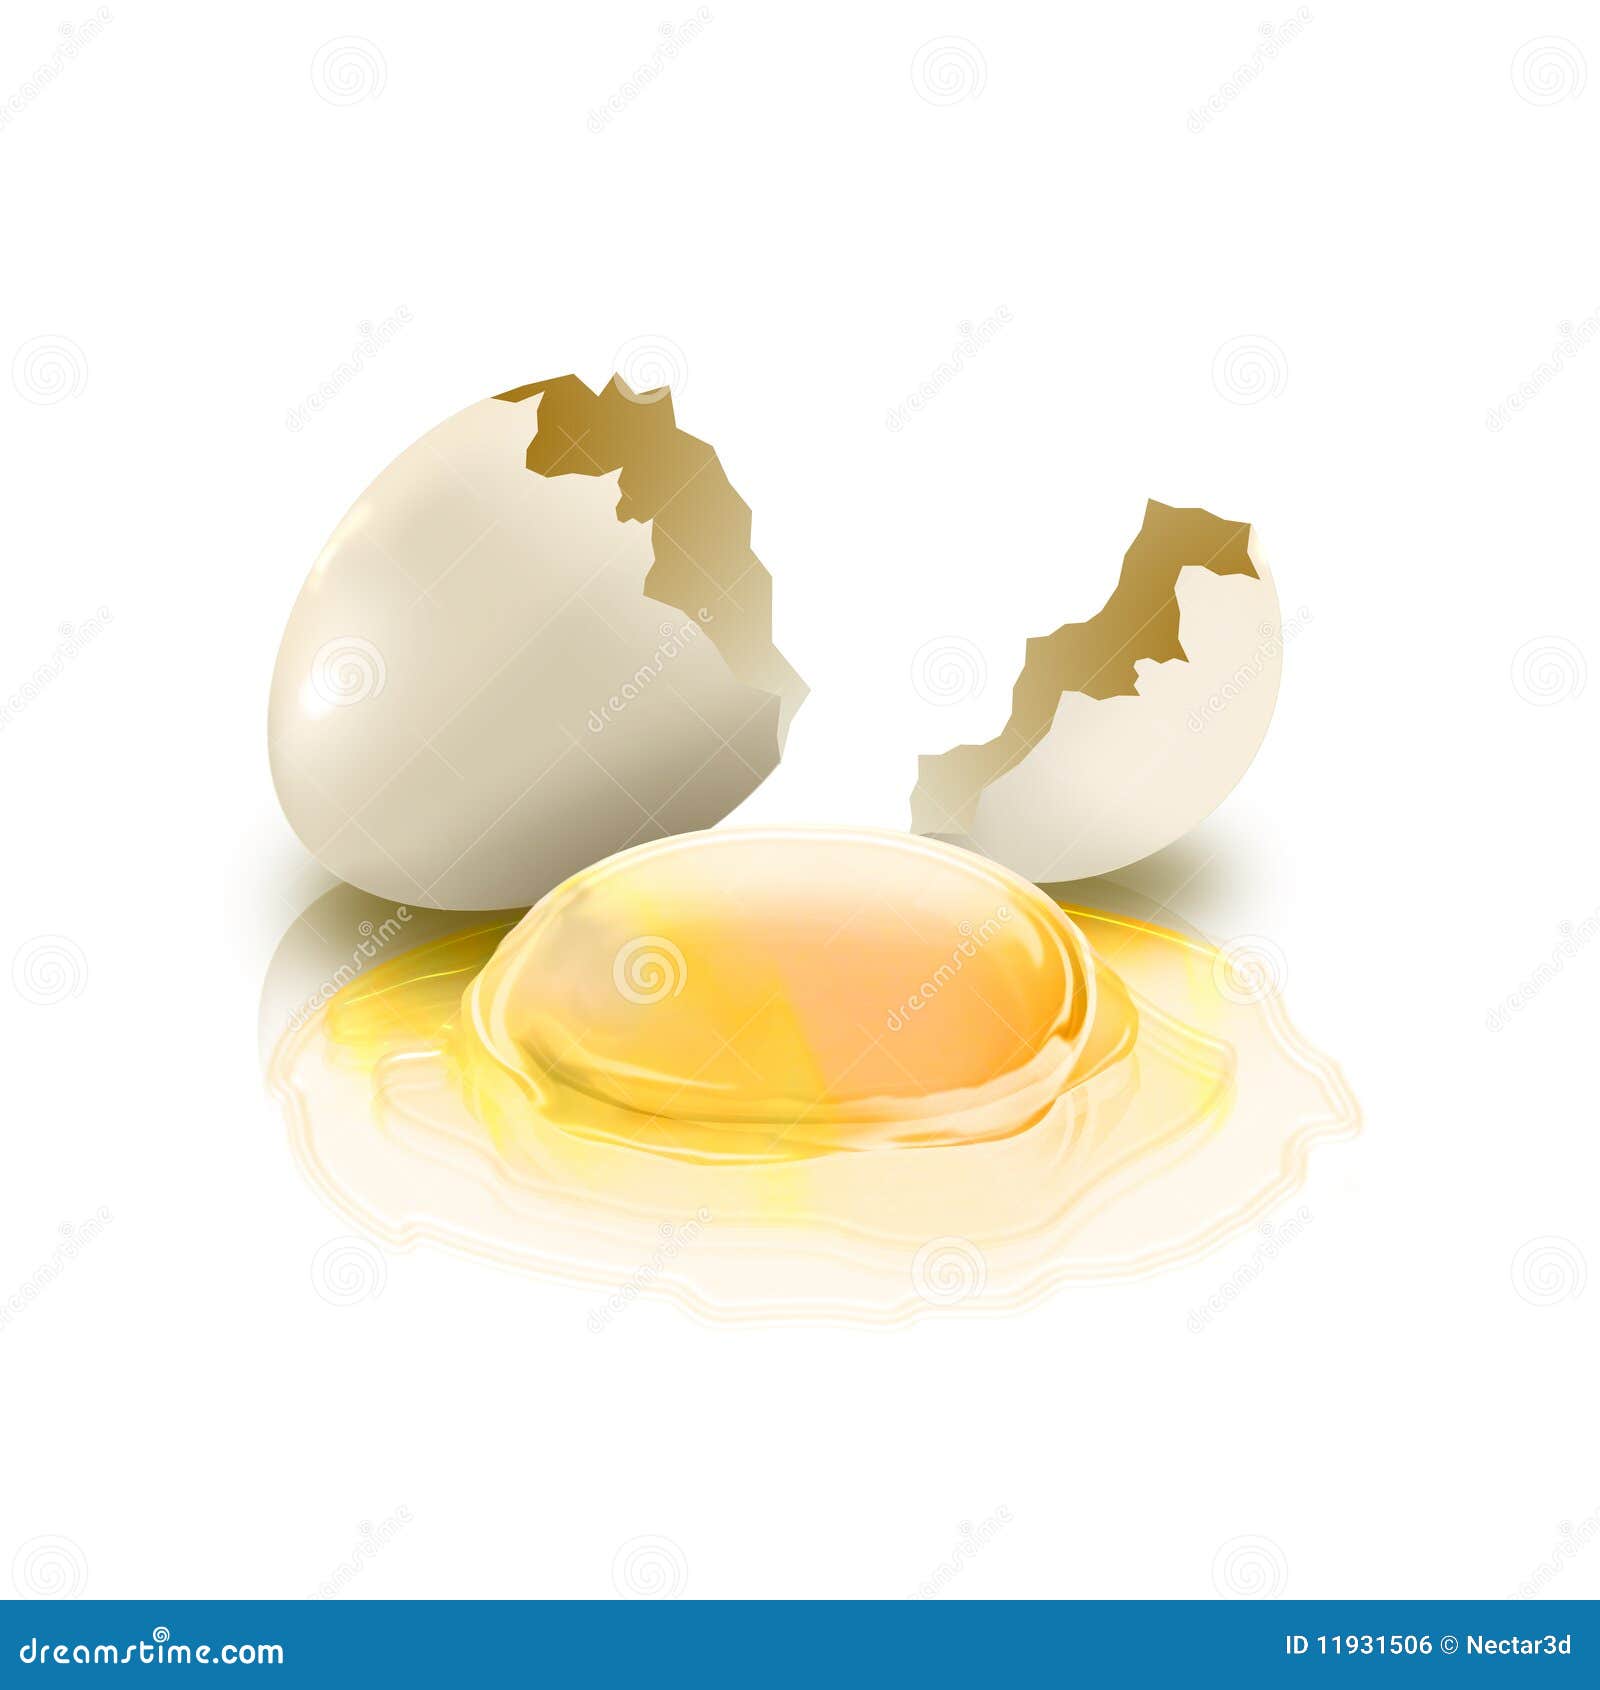 clipart of yolk - photo #48